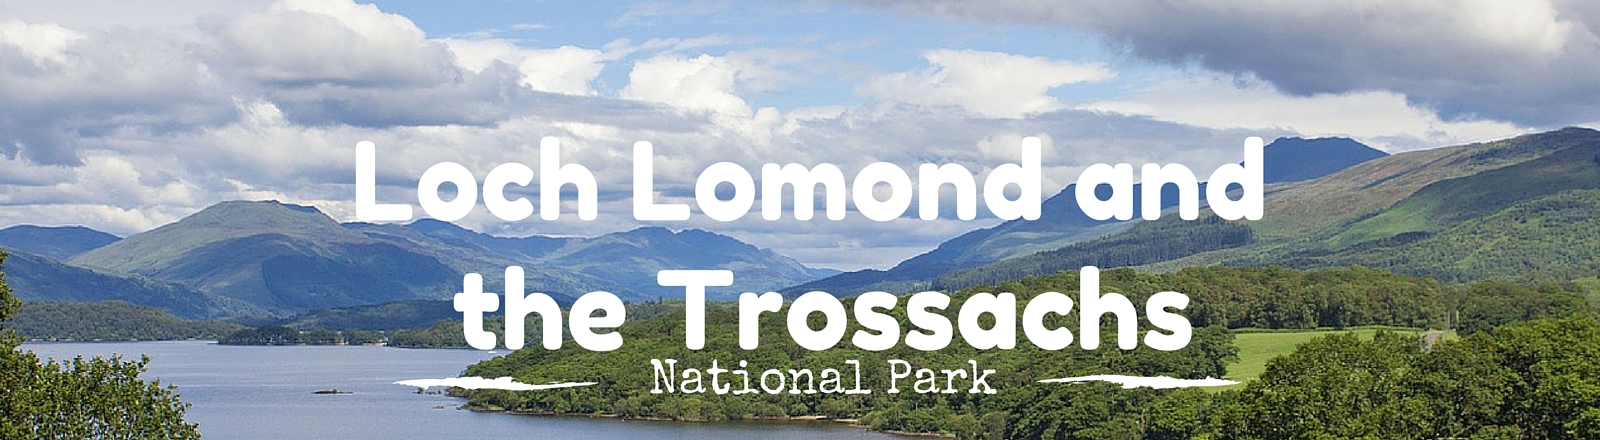 Loch Lomond and the Trossachs National Park, Scotland, National Parks Guy